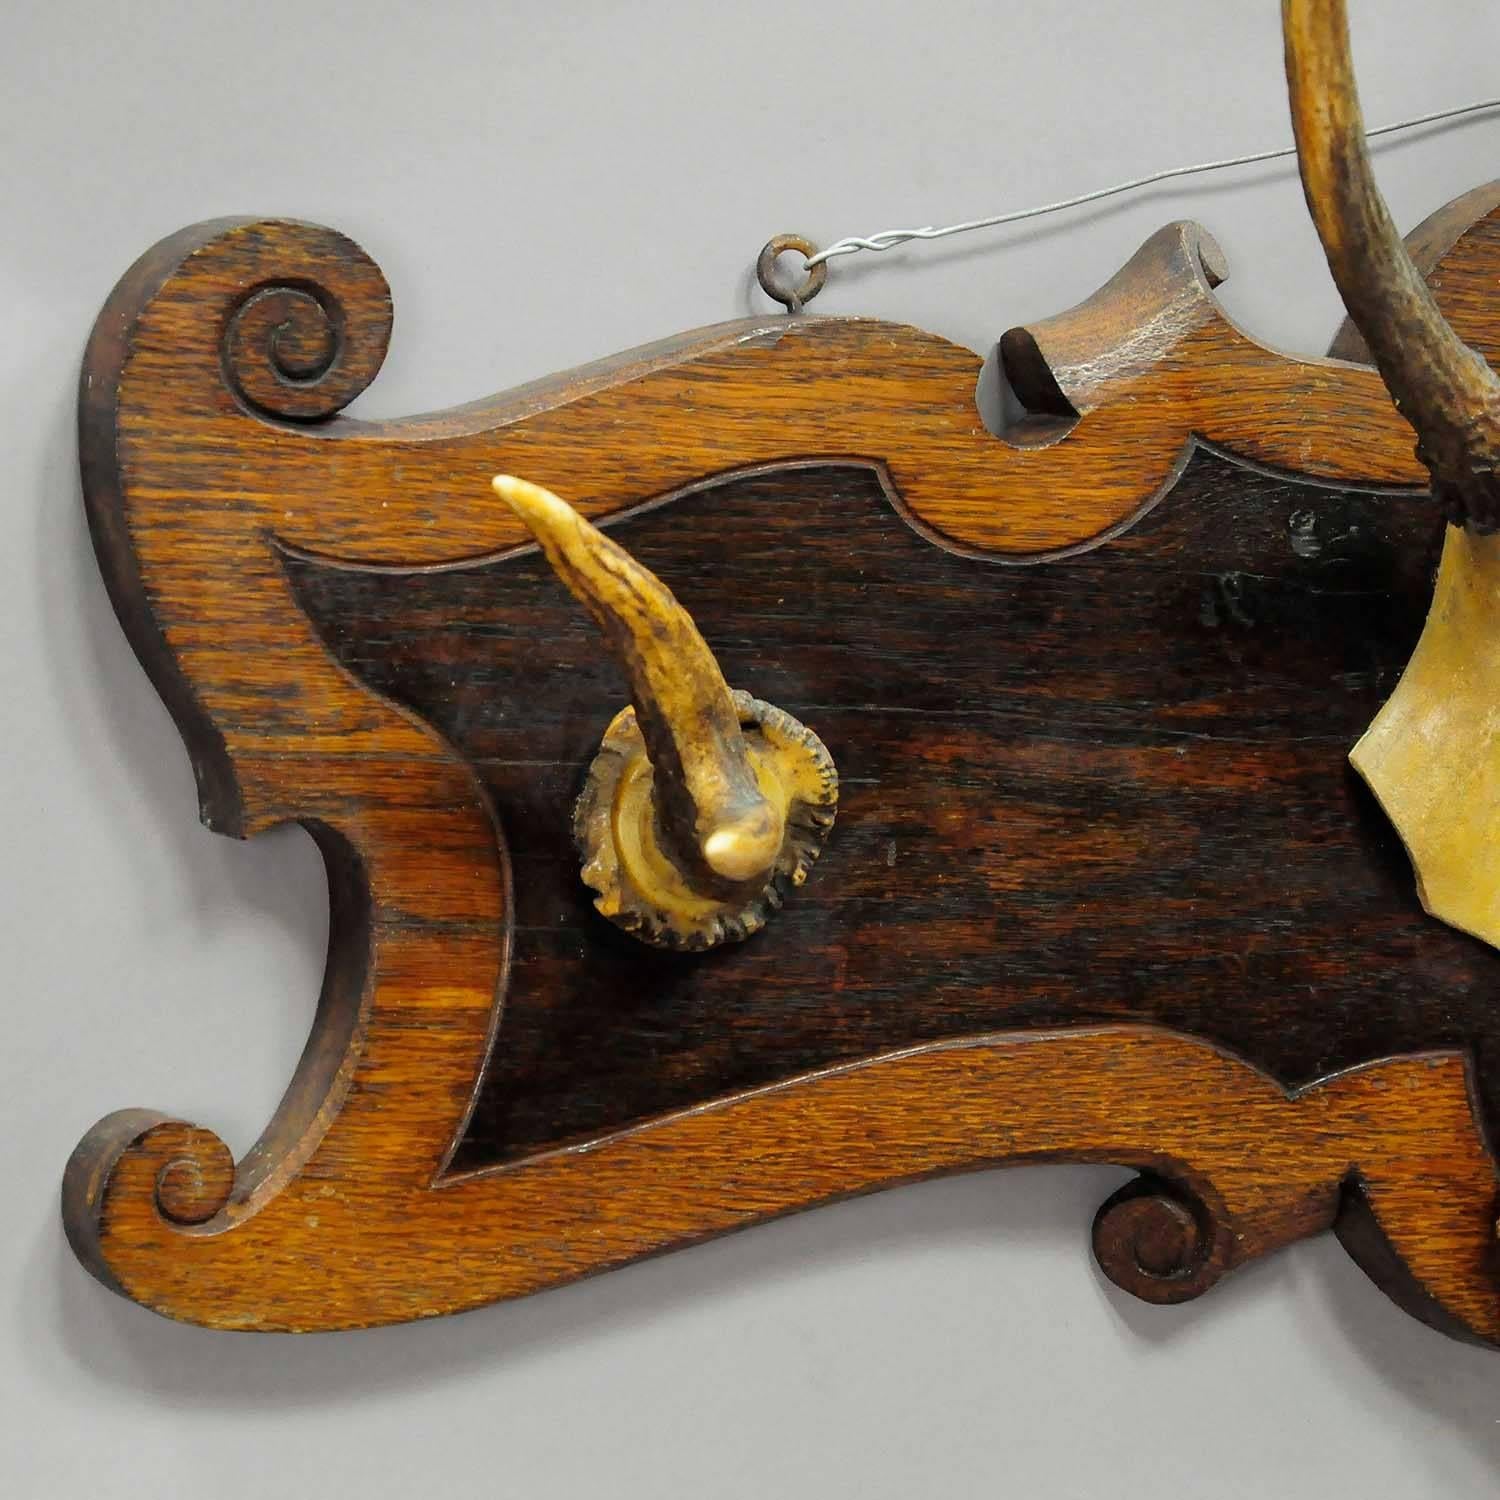 Rustic Antique Wooden Wardrobe with Deer Antlers